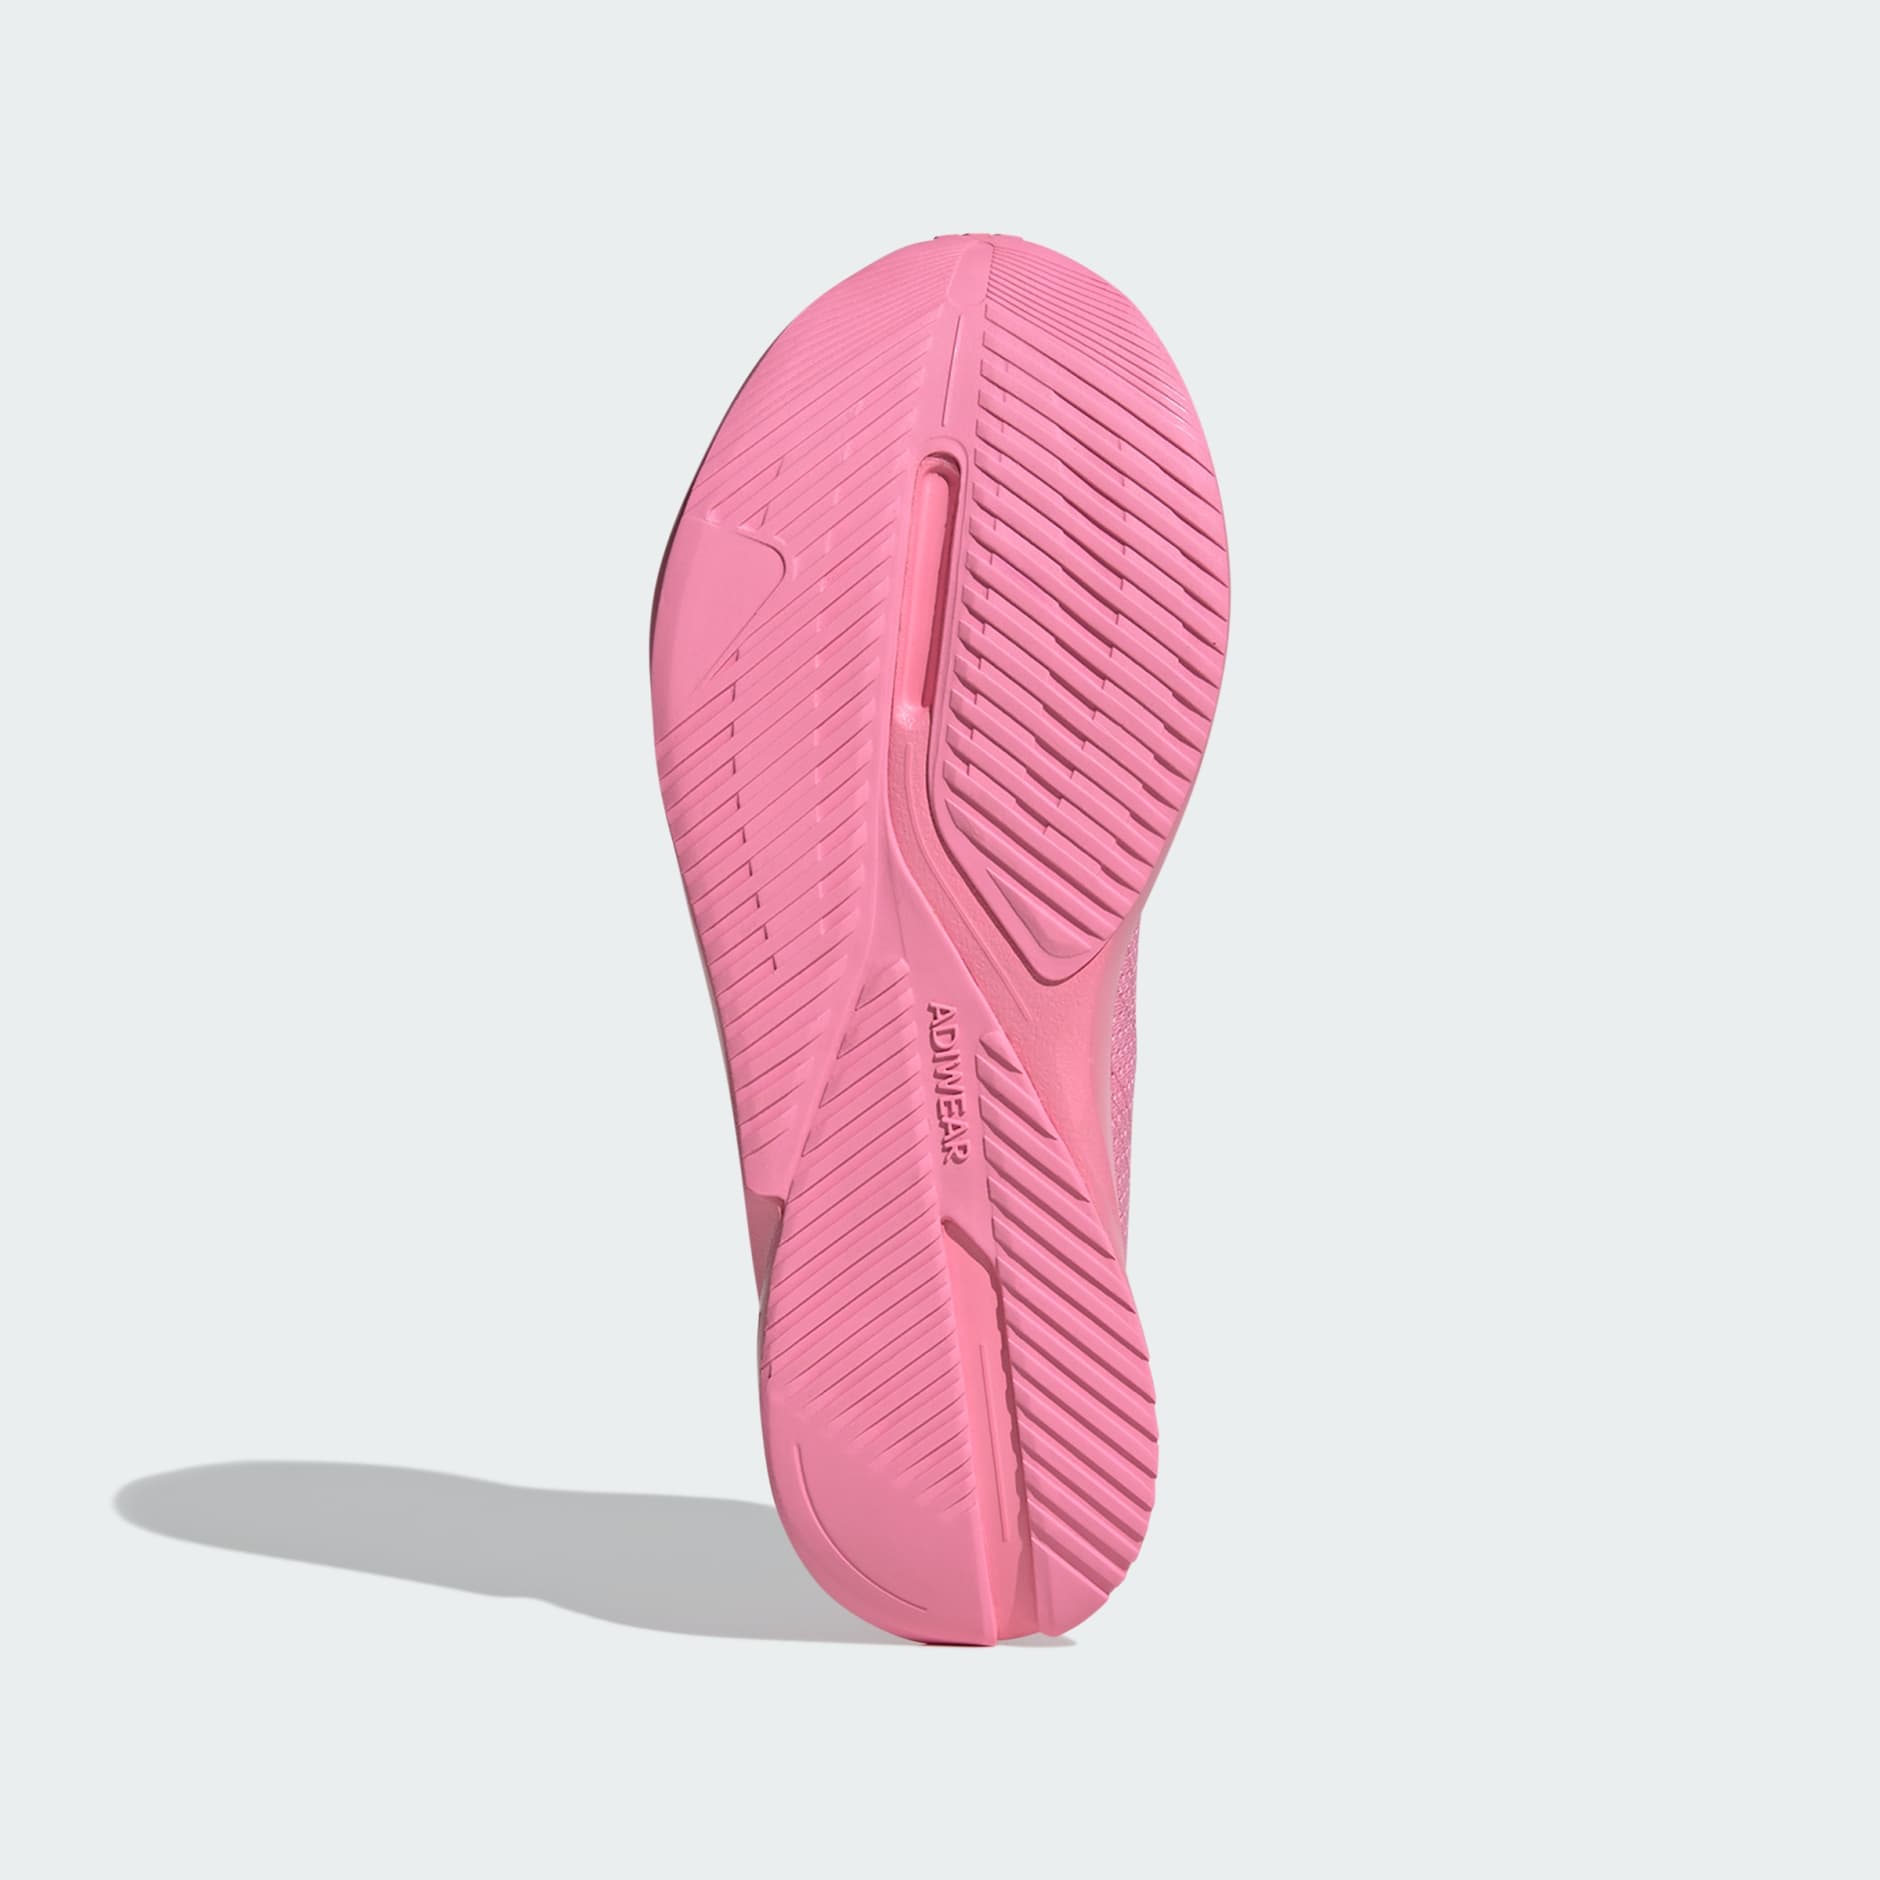 adidas Duramo SL Shoes - Pink | adidas LK